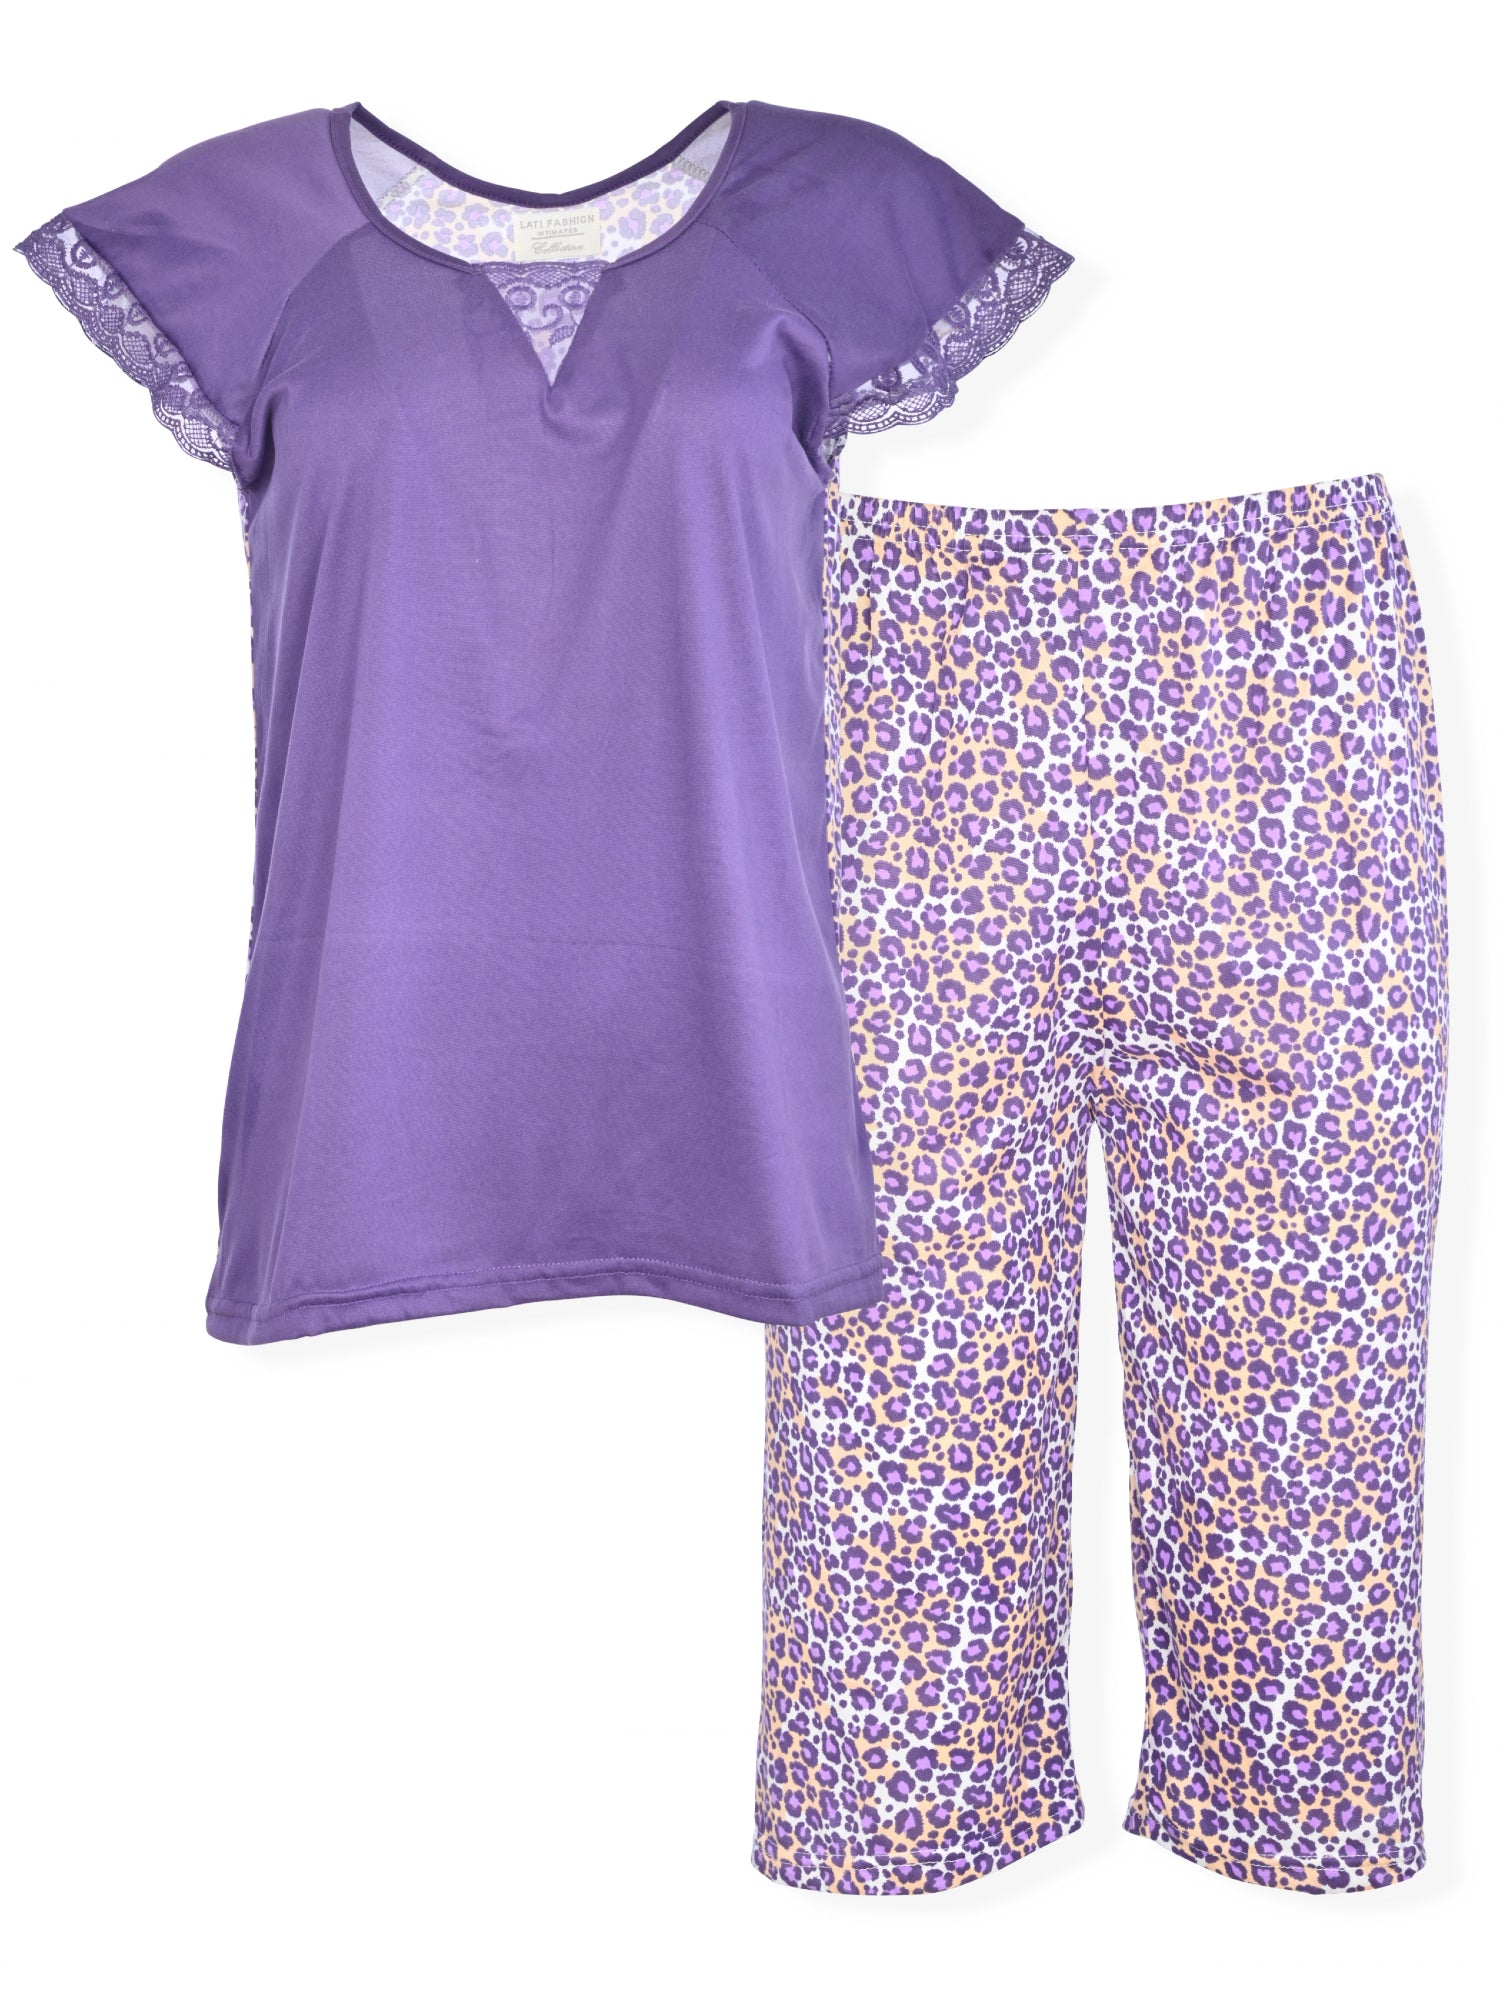 JEFFRICO Womens Pajamas For Women Capri Set Sleepwear Soft